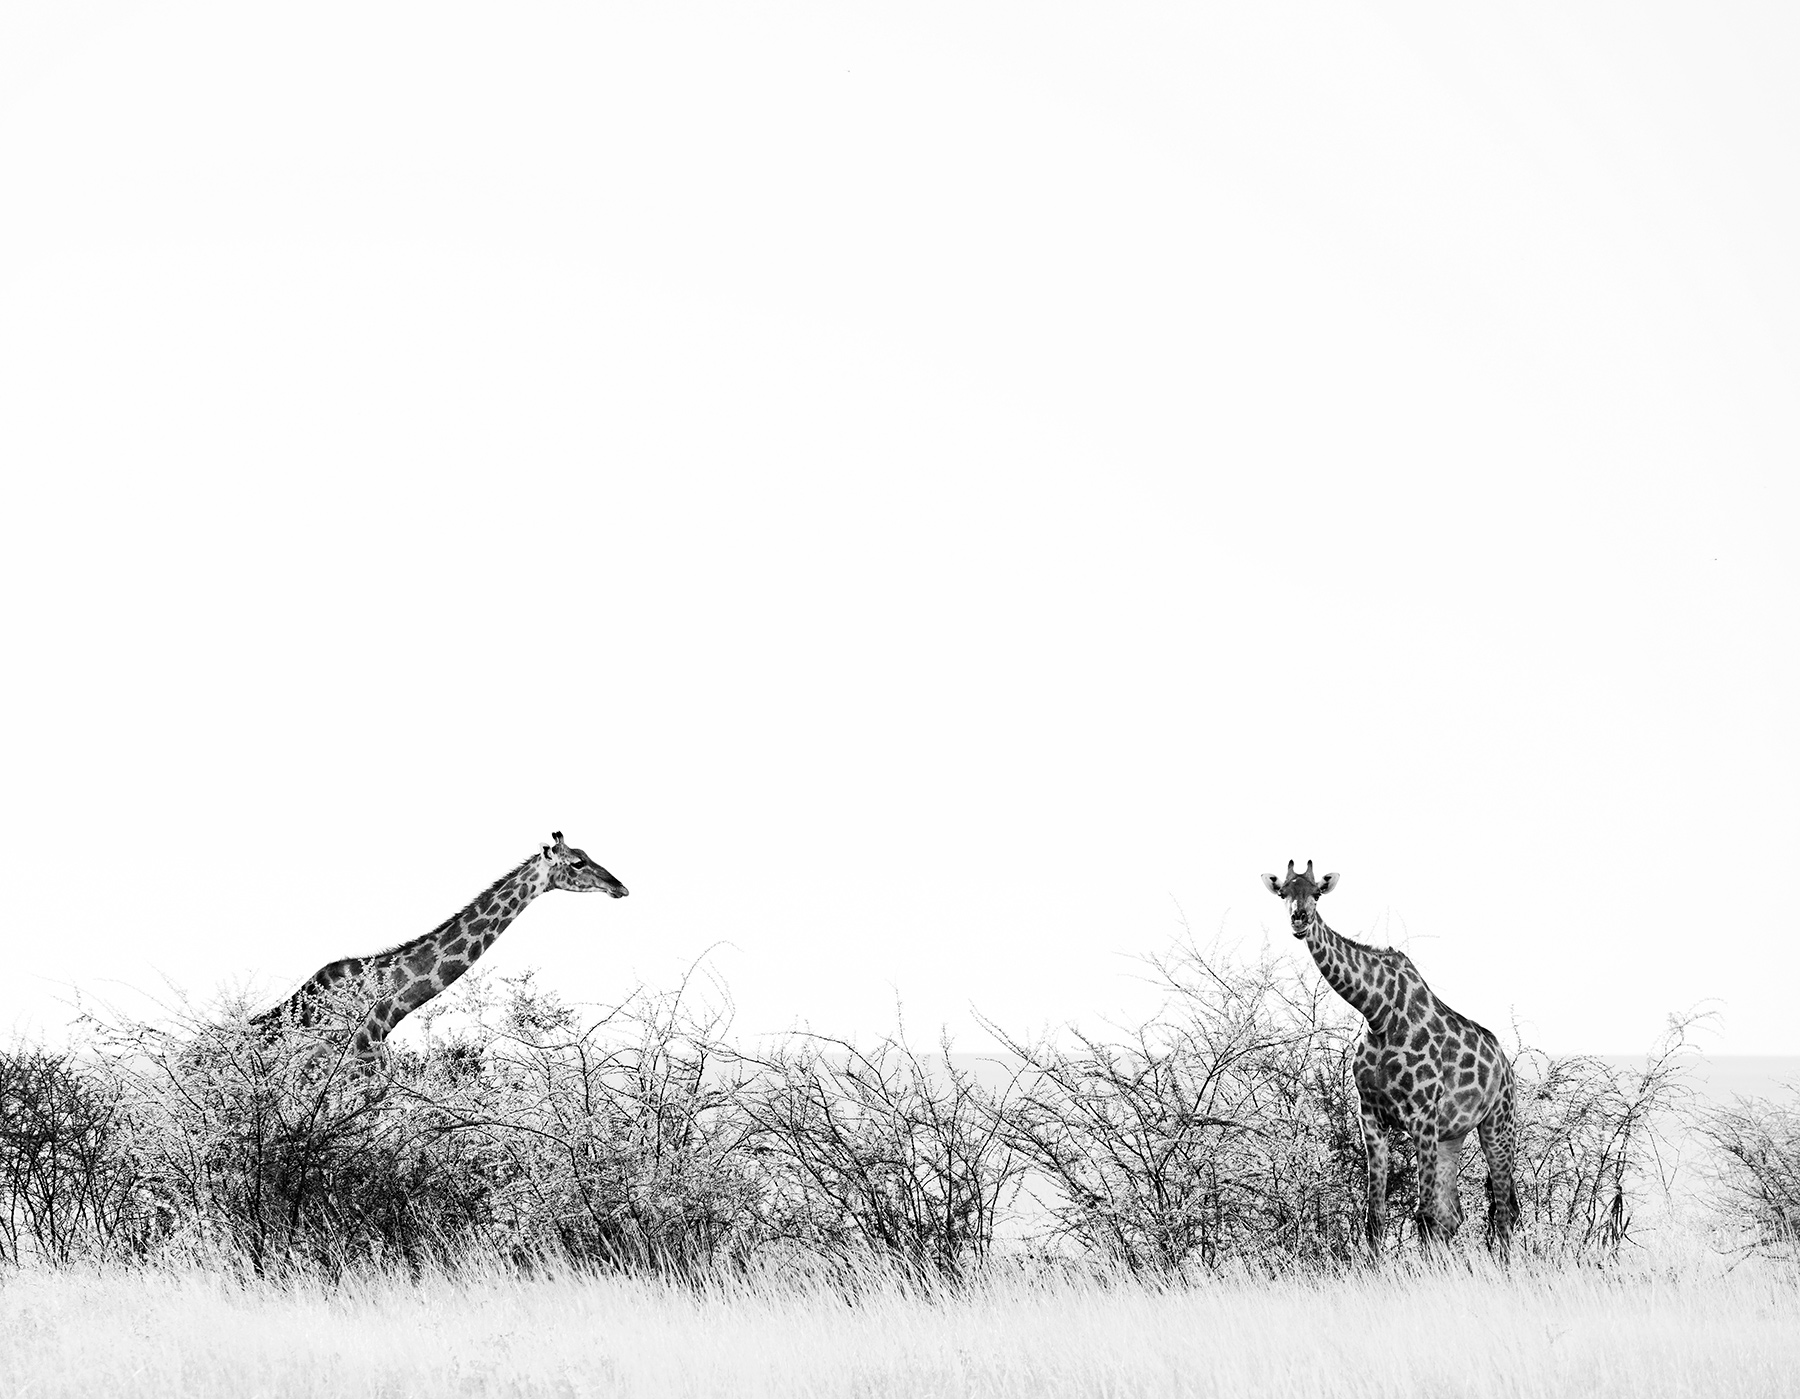 Giraffe in Etosha National Park in Namibia, Africa